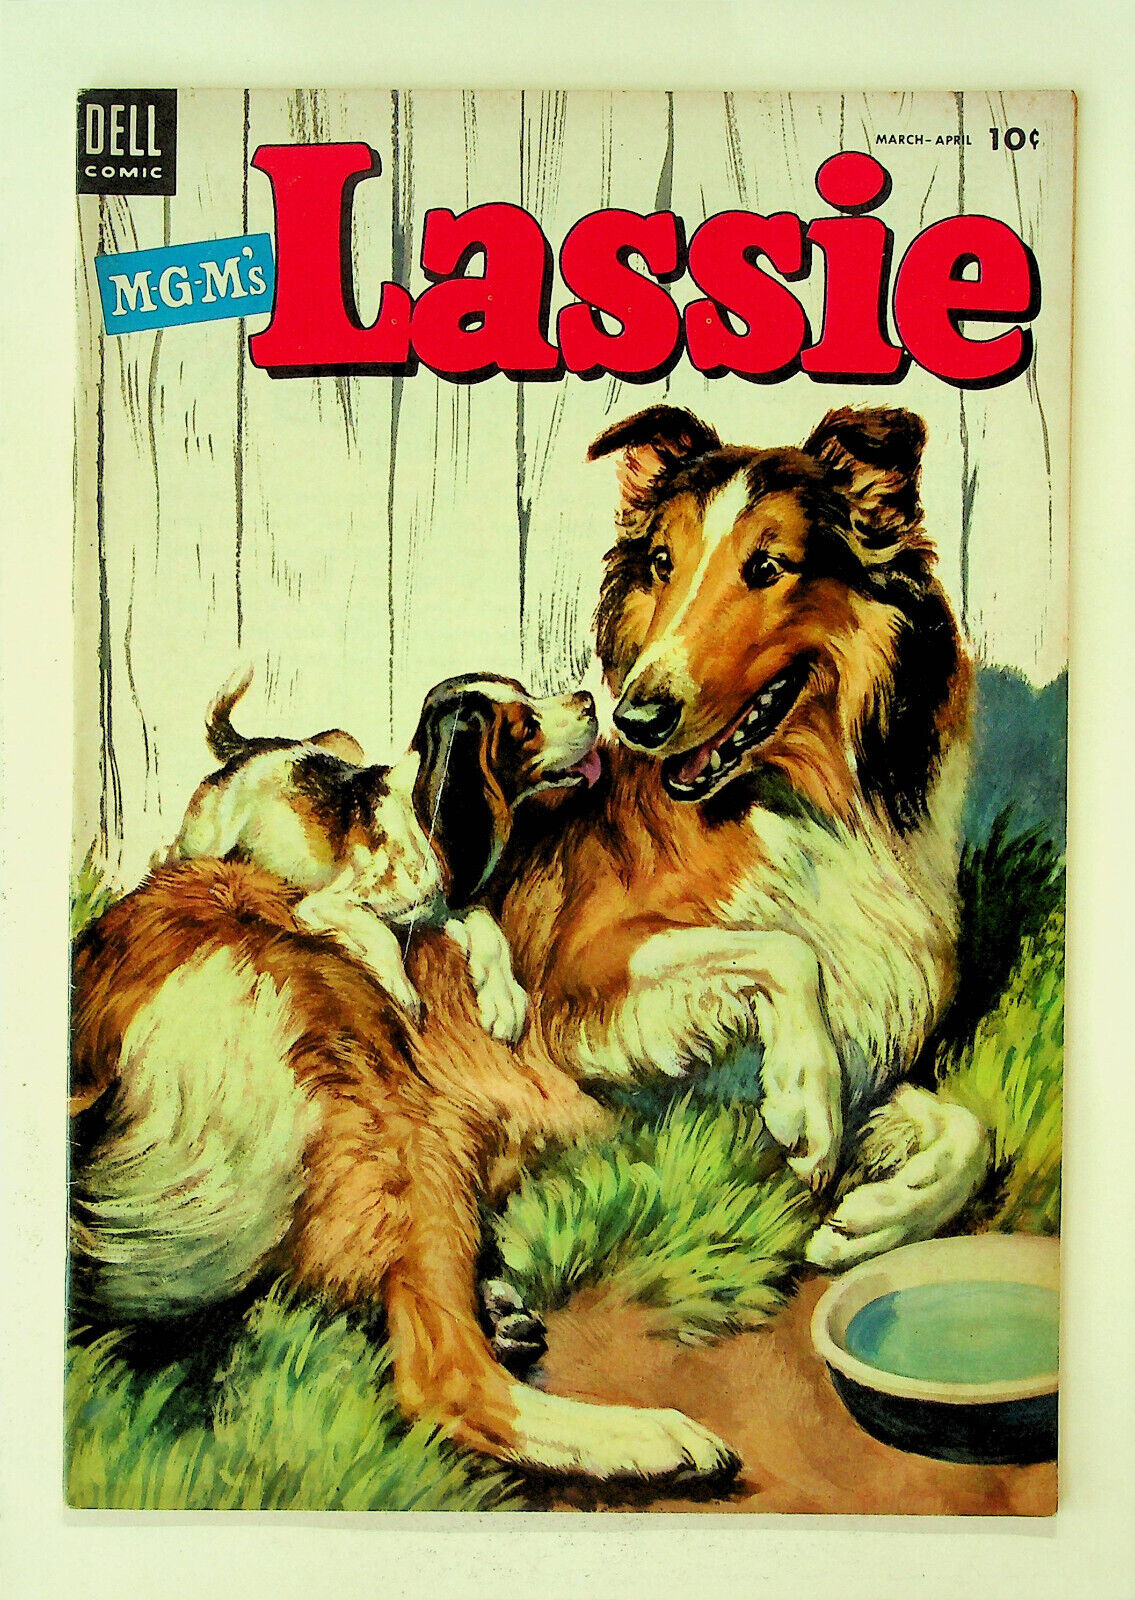 MGM's Lassie #15 (Mar-Apr 1954, Dell) - Good